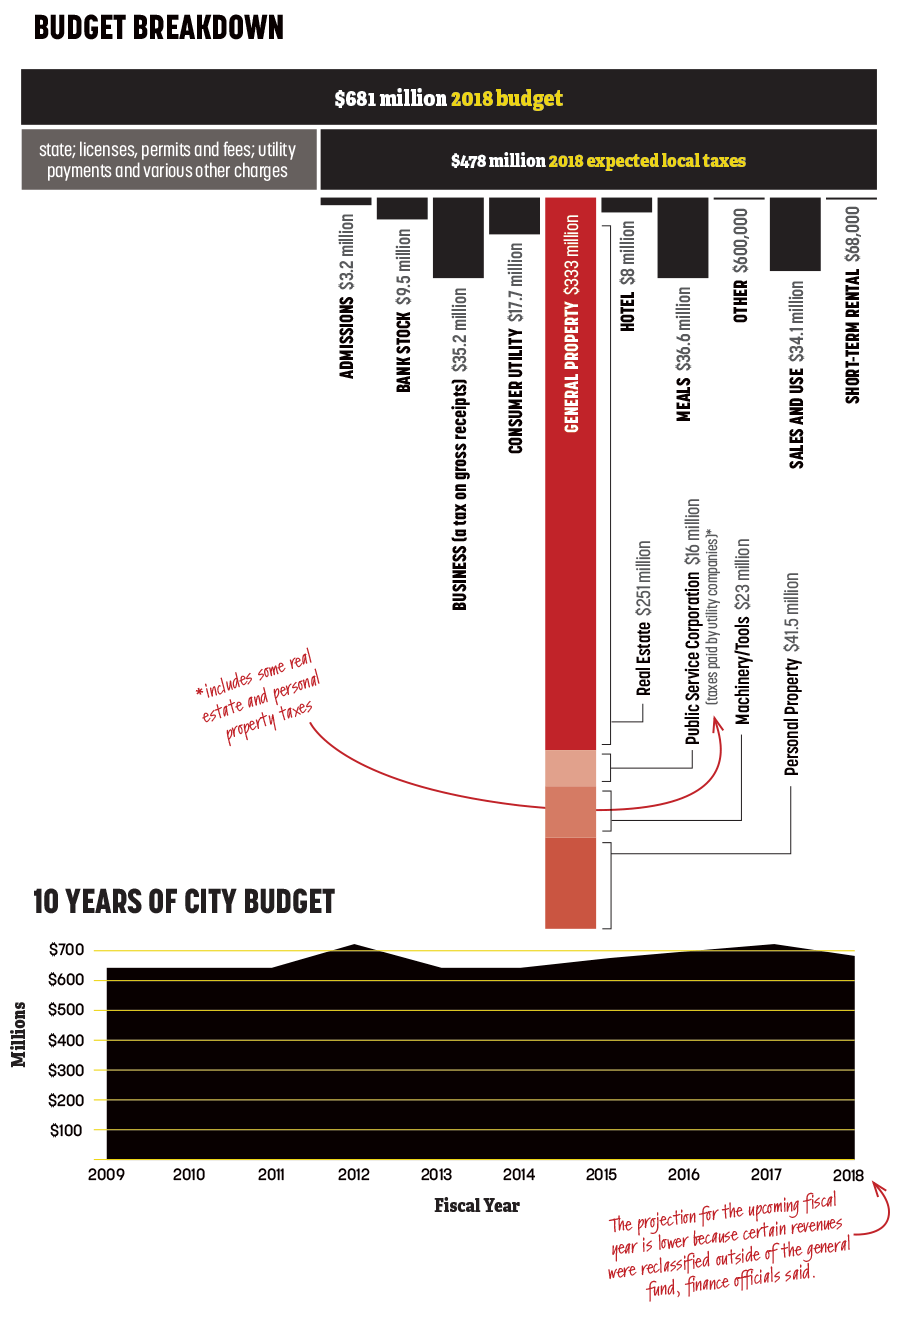 city-budget-breakdown_10-years.gif